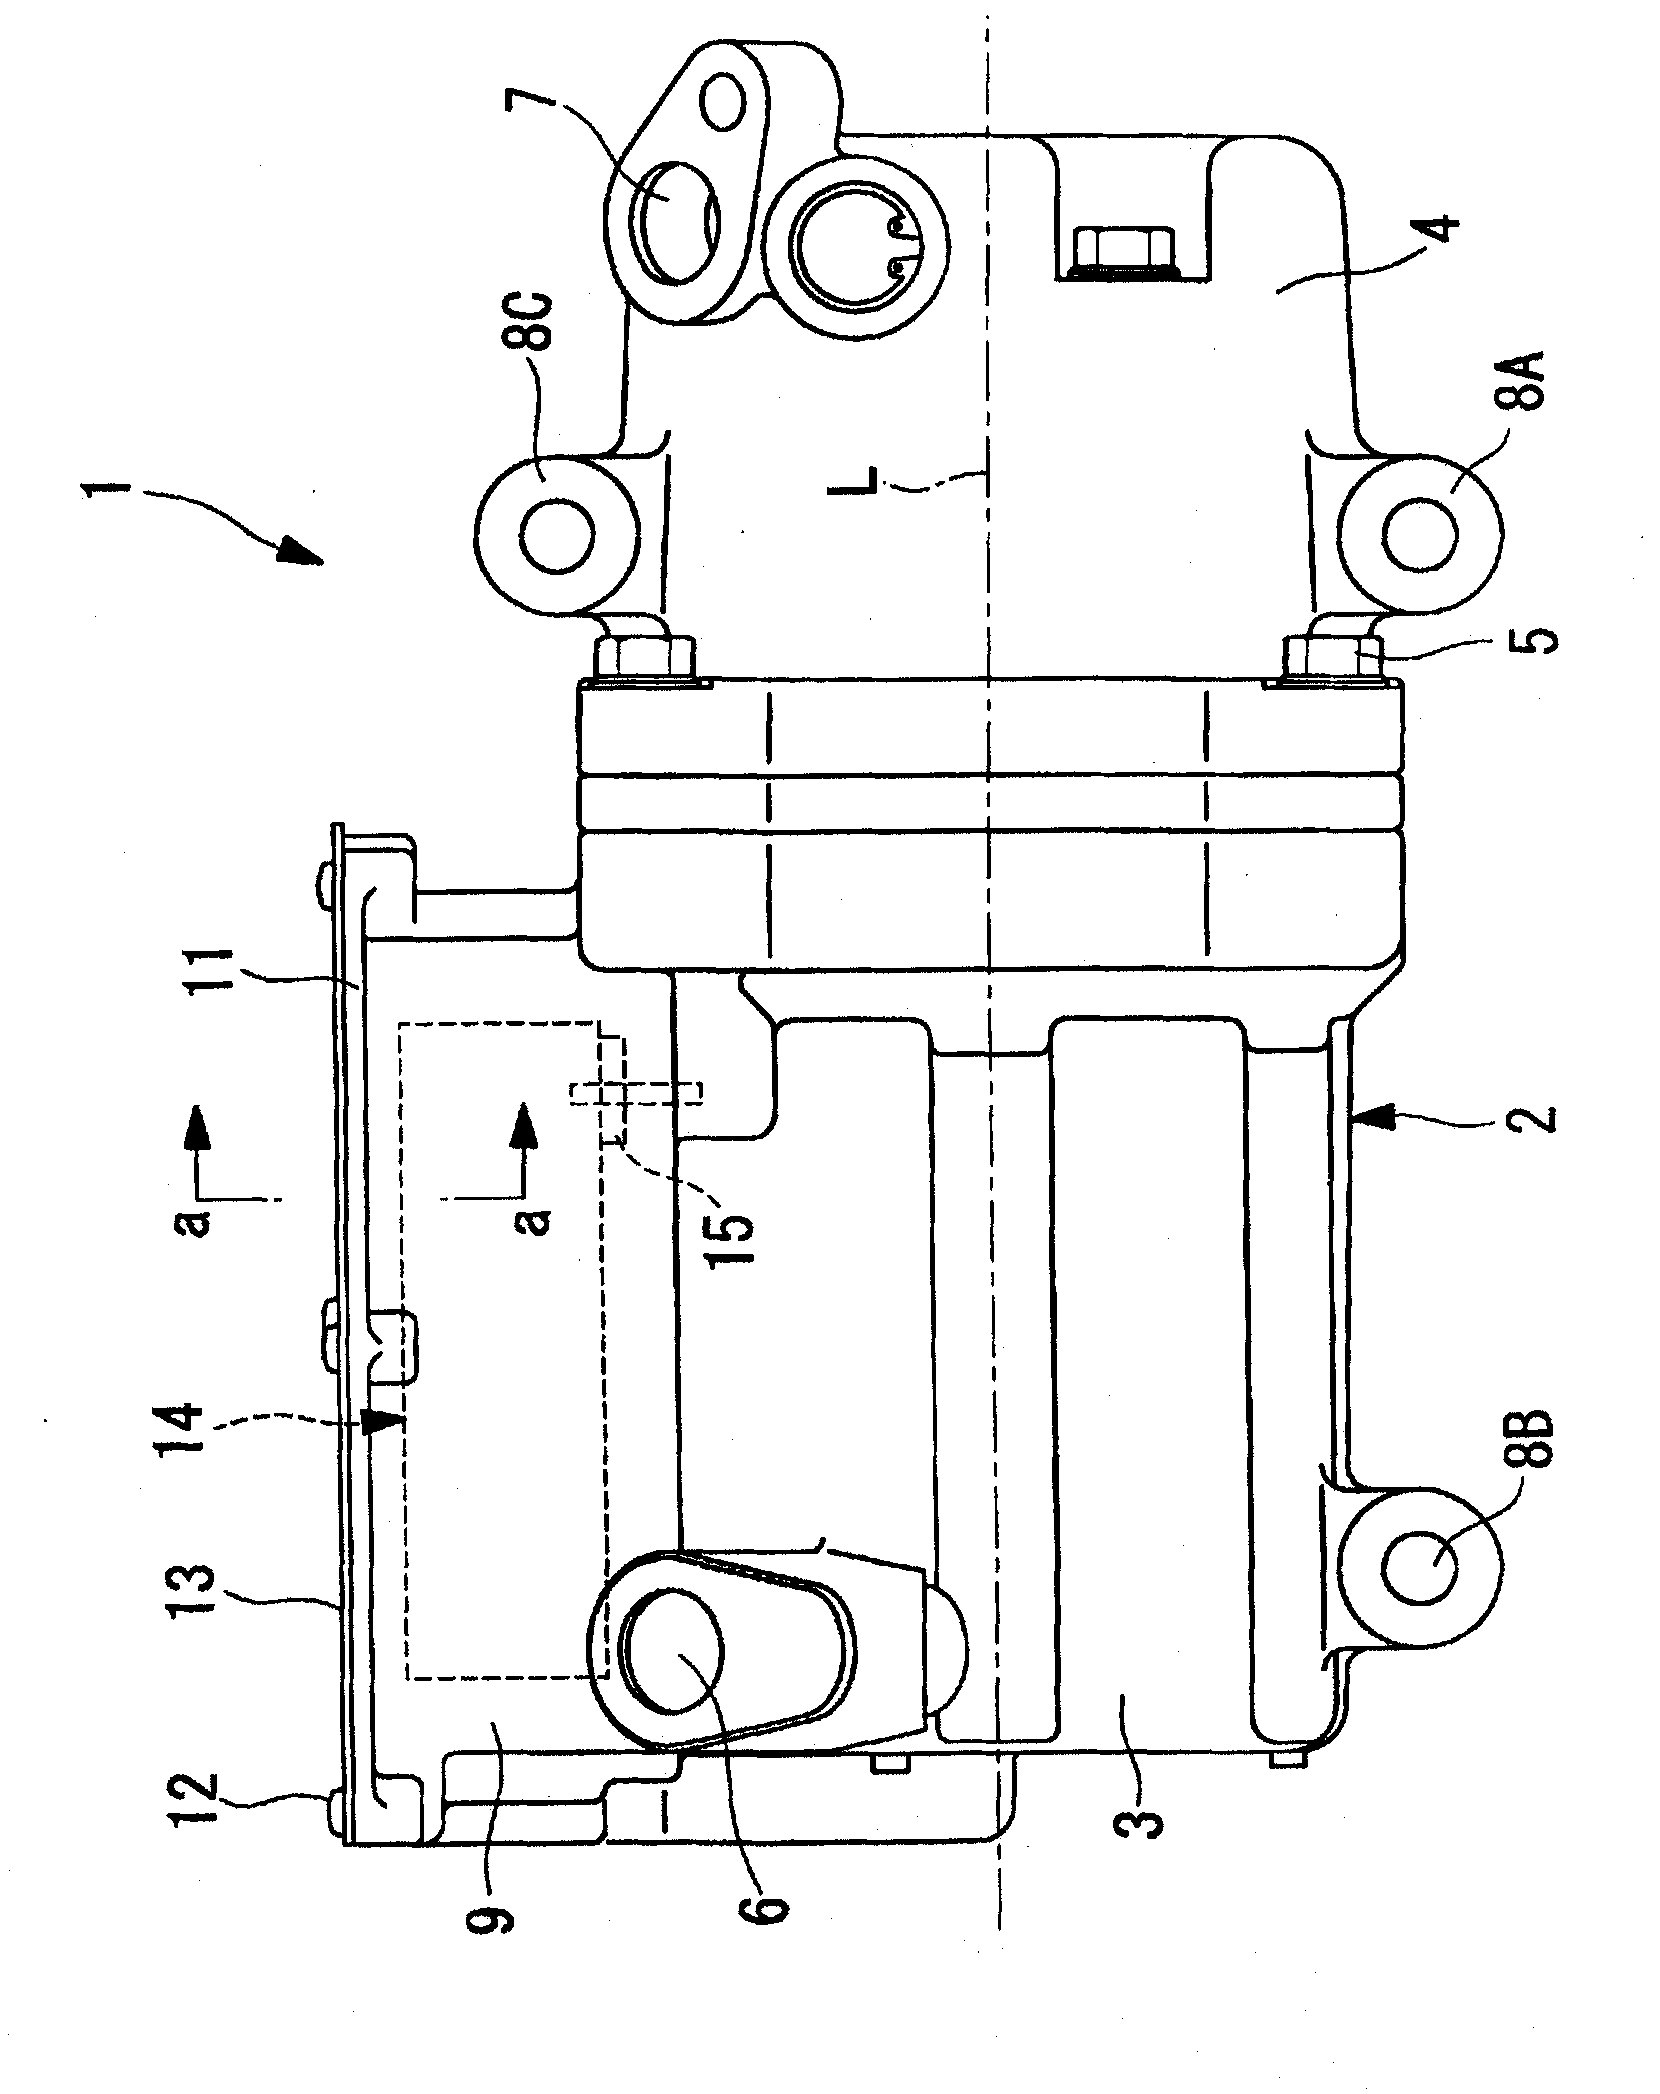 Electric compressor integral with inverter